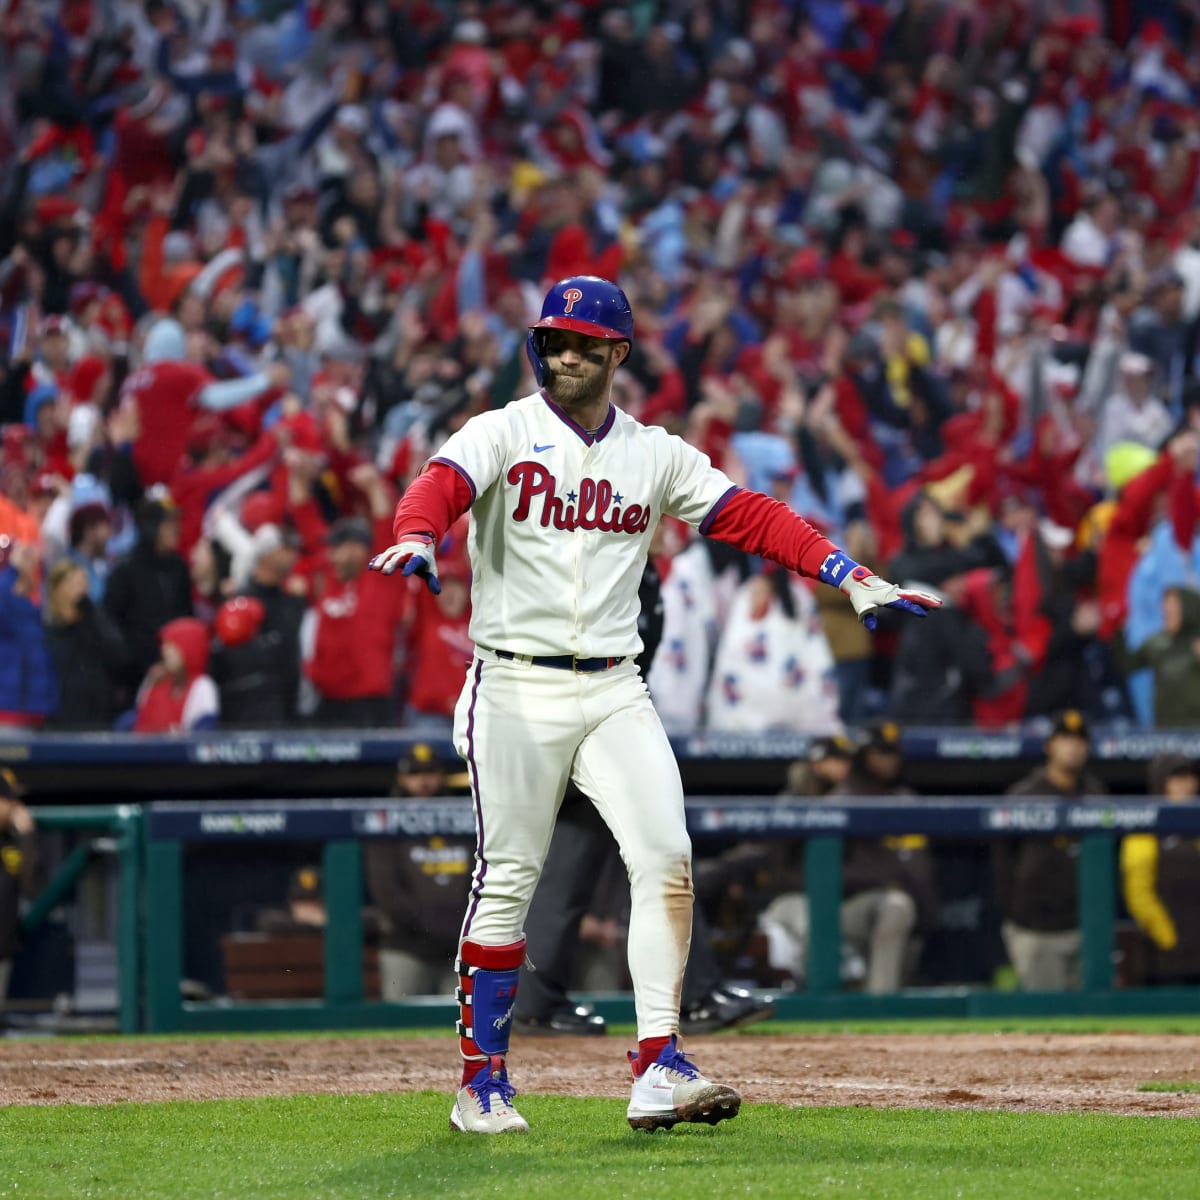 Bryce Harper becomes a legend as Phillies reach World Series